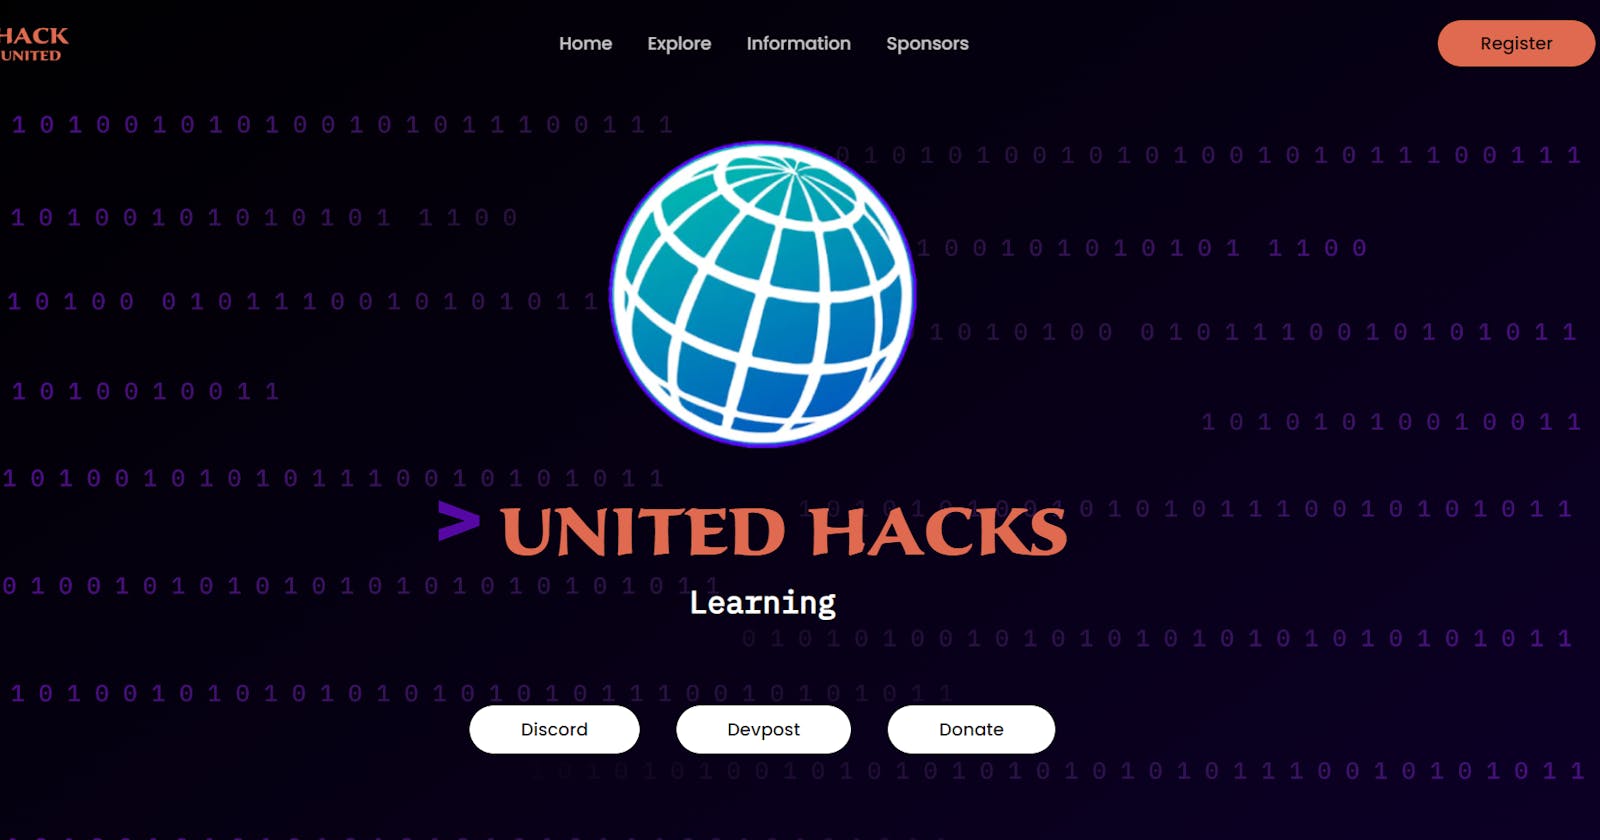 United Hacks Recap: Tackling Mental Health Challenges Through Technology